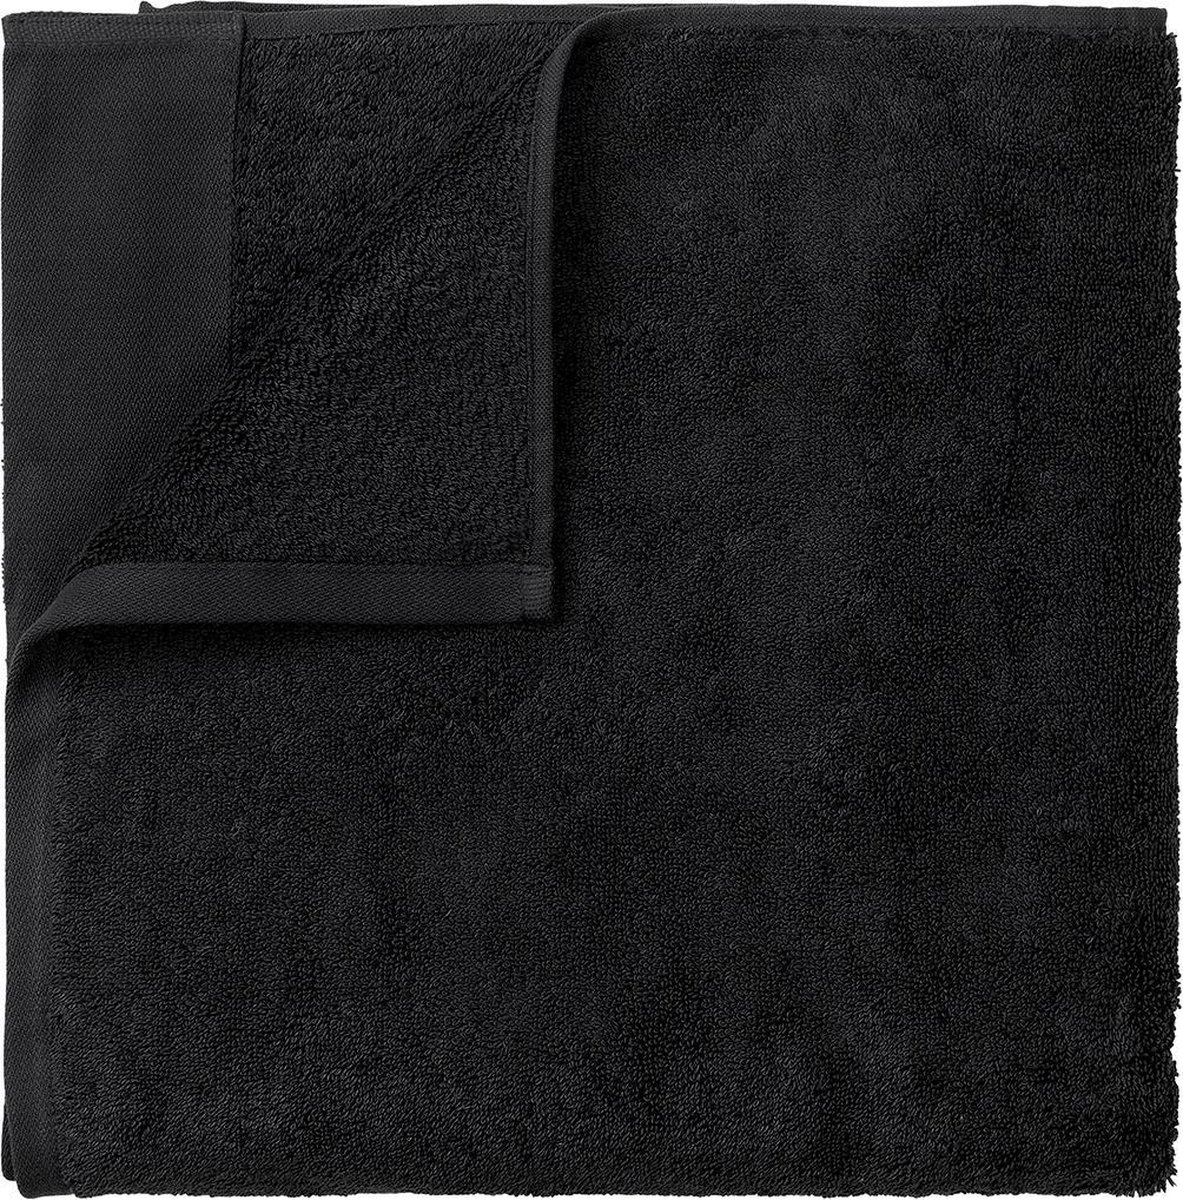 Badlaken 70x140 cm RIVA kleur Black (66299) - set/2 stuks